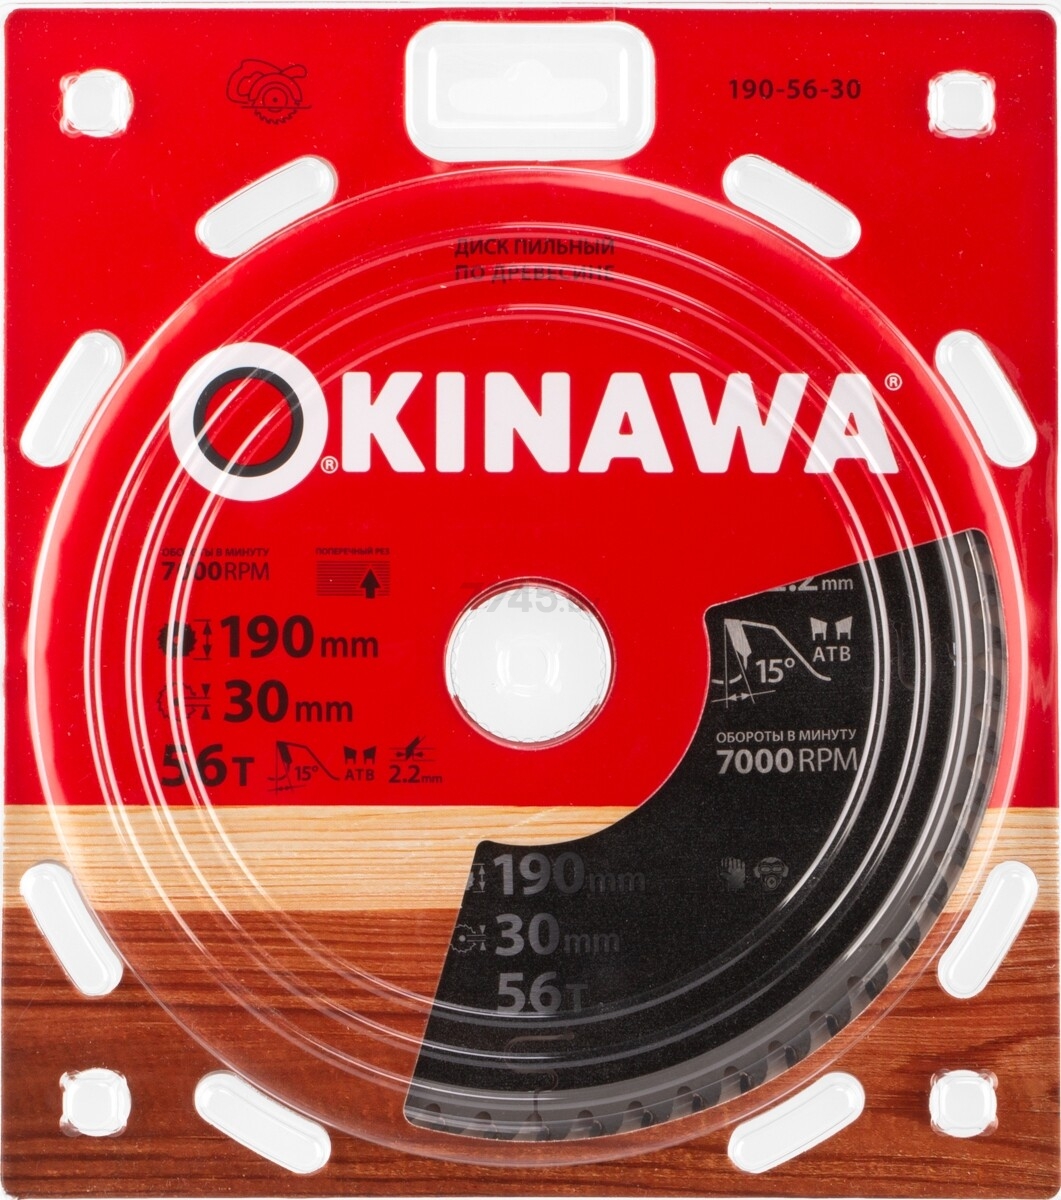 Диск пильный 190х30 мм 56 зубьев OKINAWA по дереву (190-56-30) - Фото 2